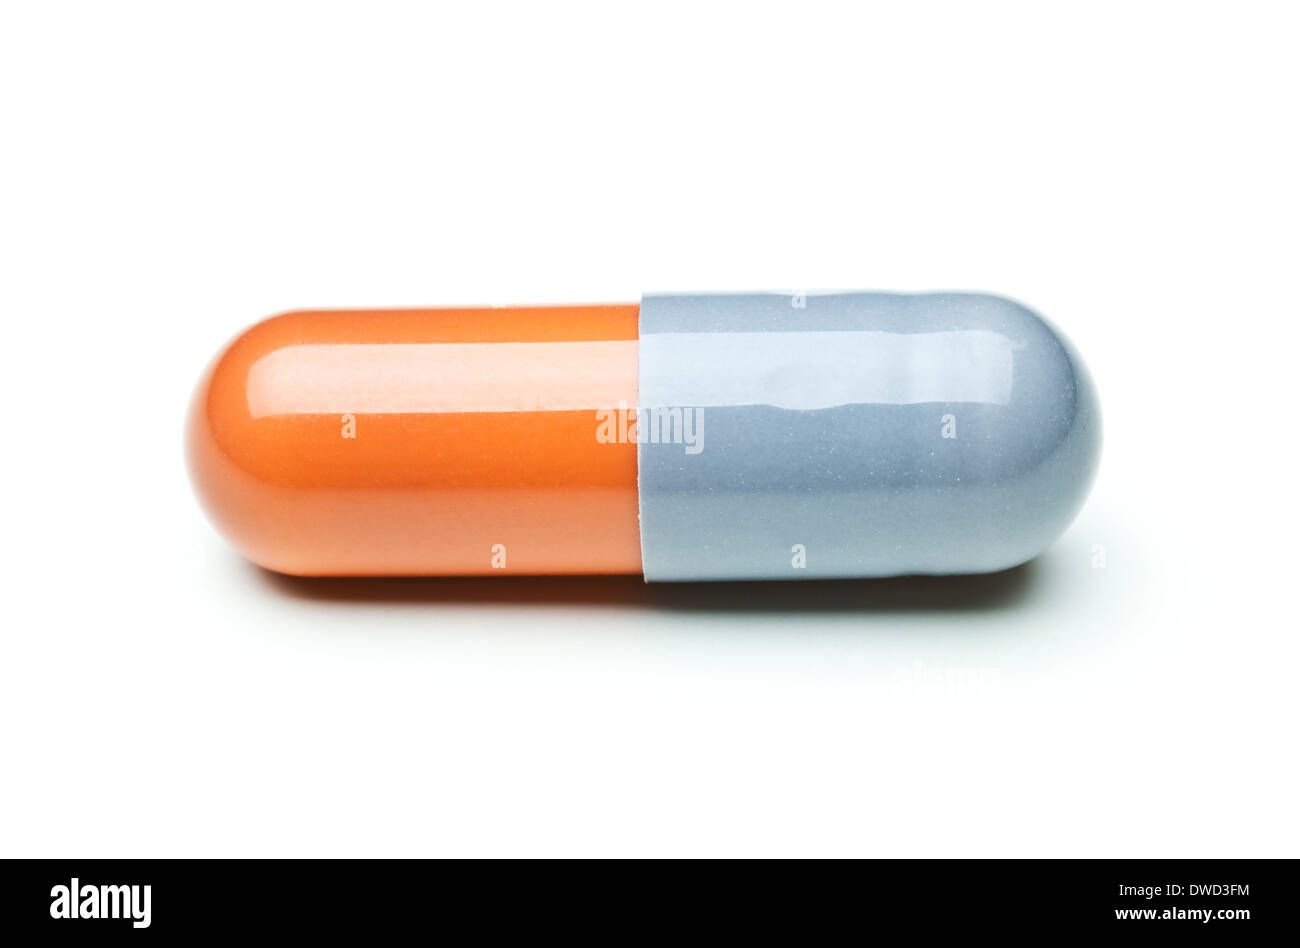 antibiotics Flucloxacillin 500mg Capsule Penicillin Antibiotic Tablet Stock Photo